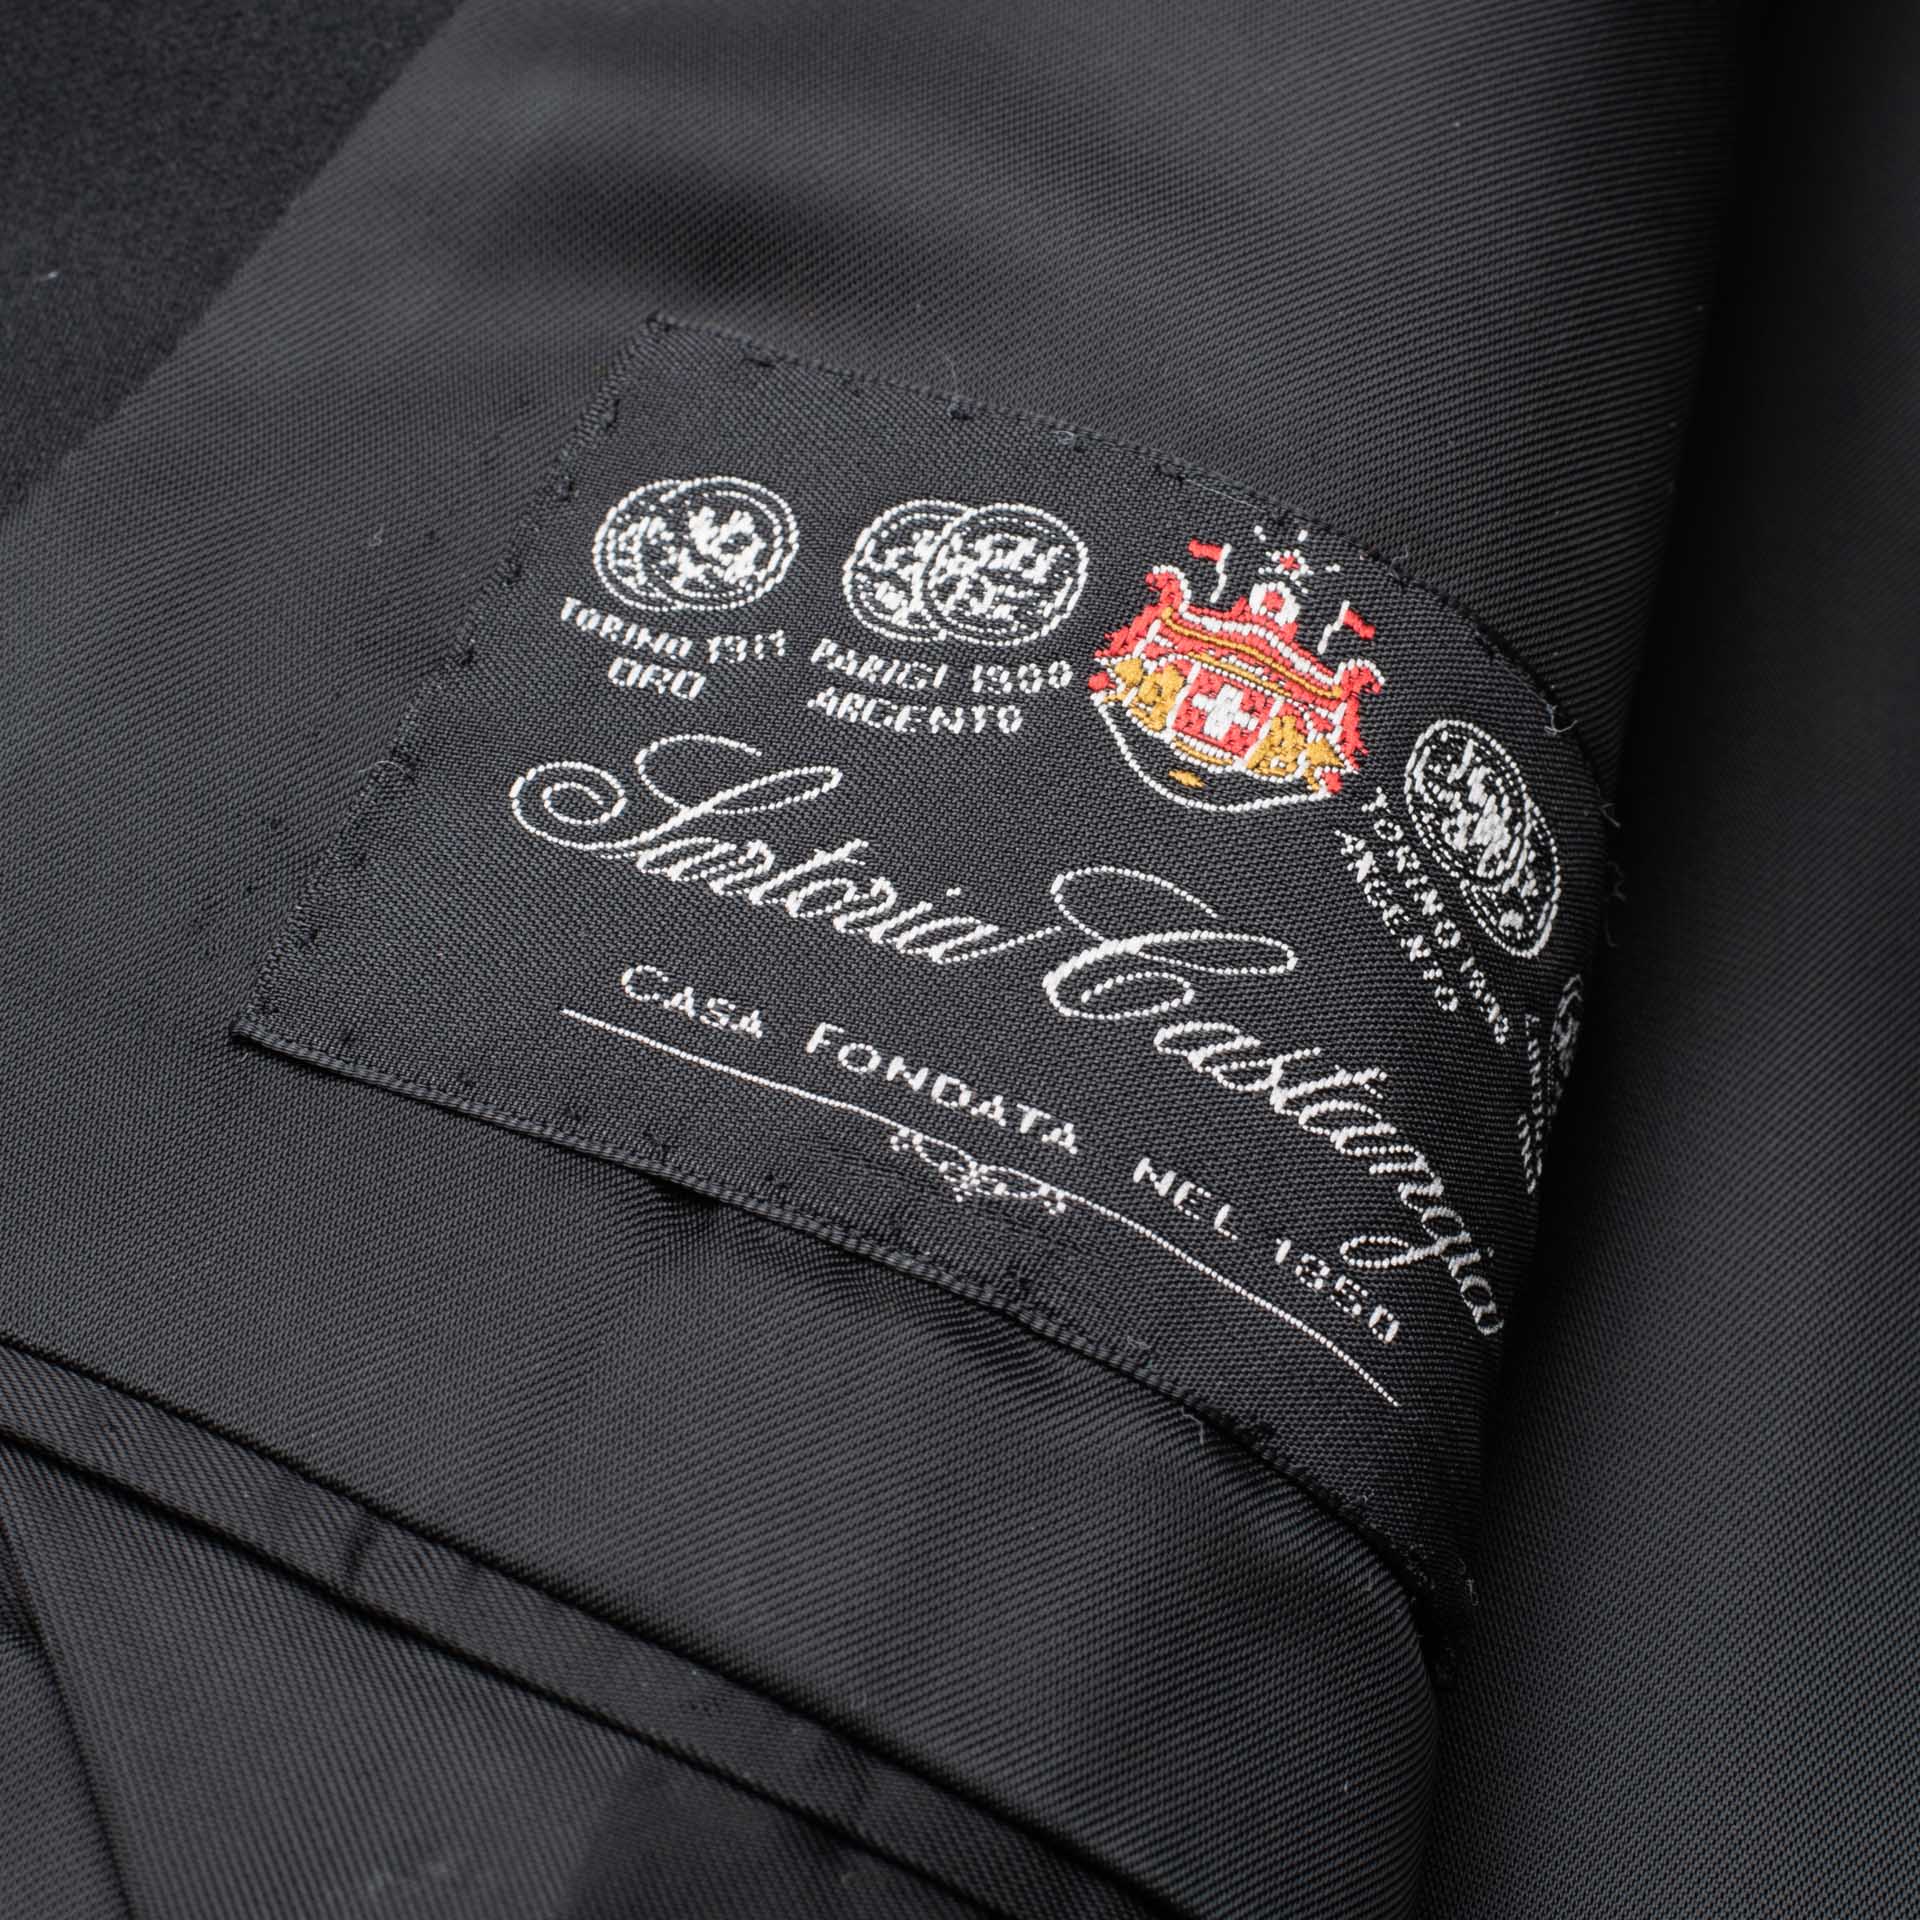 SARTORIA CASTANGIA Black Wool Notch Lapel Tuxedo Suit EU 50 NEW US 40 CASTANGIA